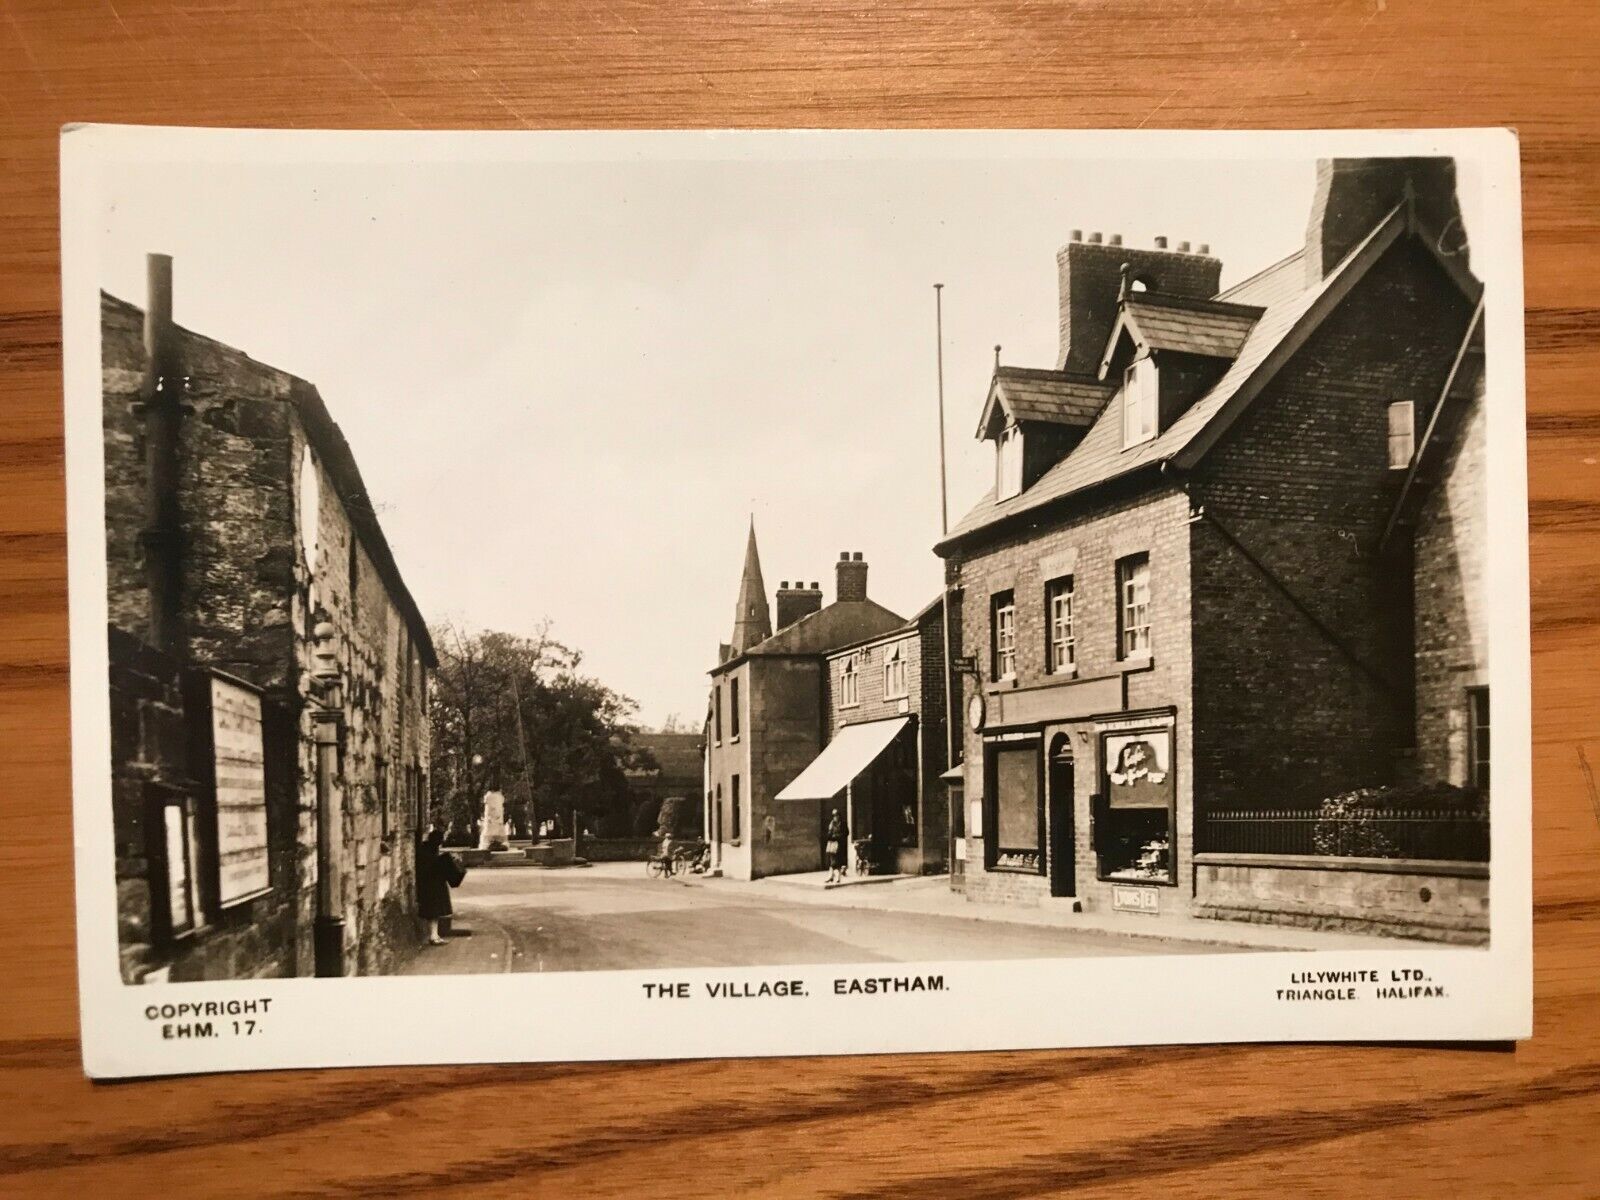 The Village, Eastham - Vintage Postcard - Lilywhite LTD. Triangle Halifax